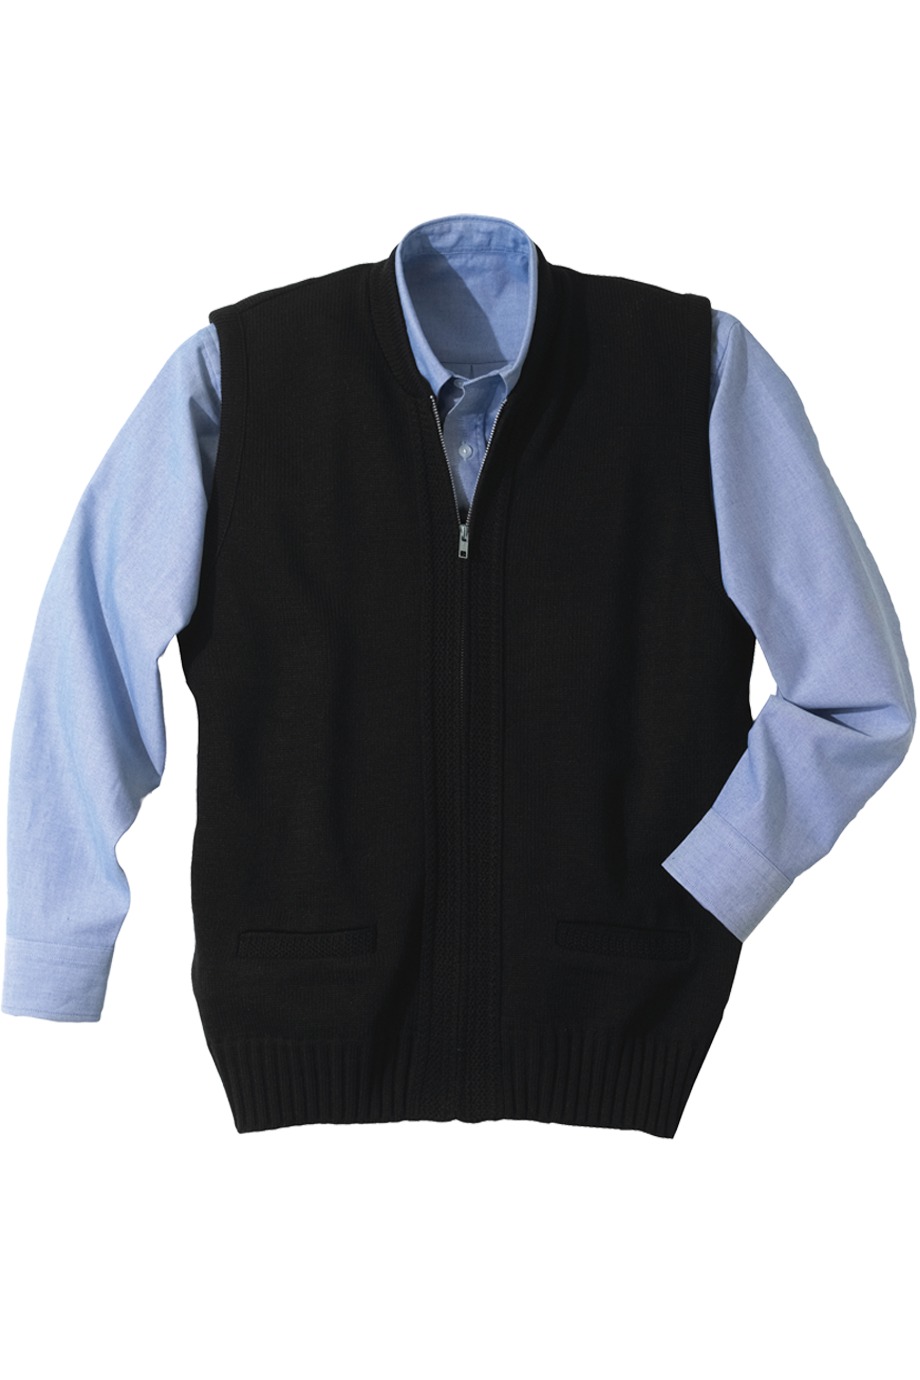 Edwards Garment 302 - Heavy Weight Zipper Vest